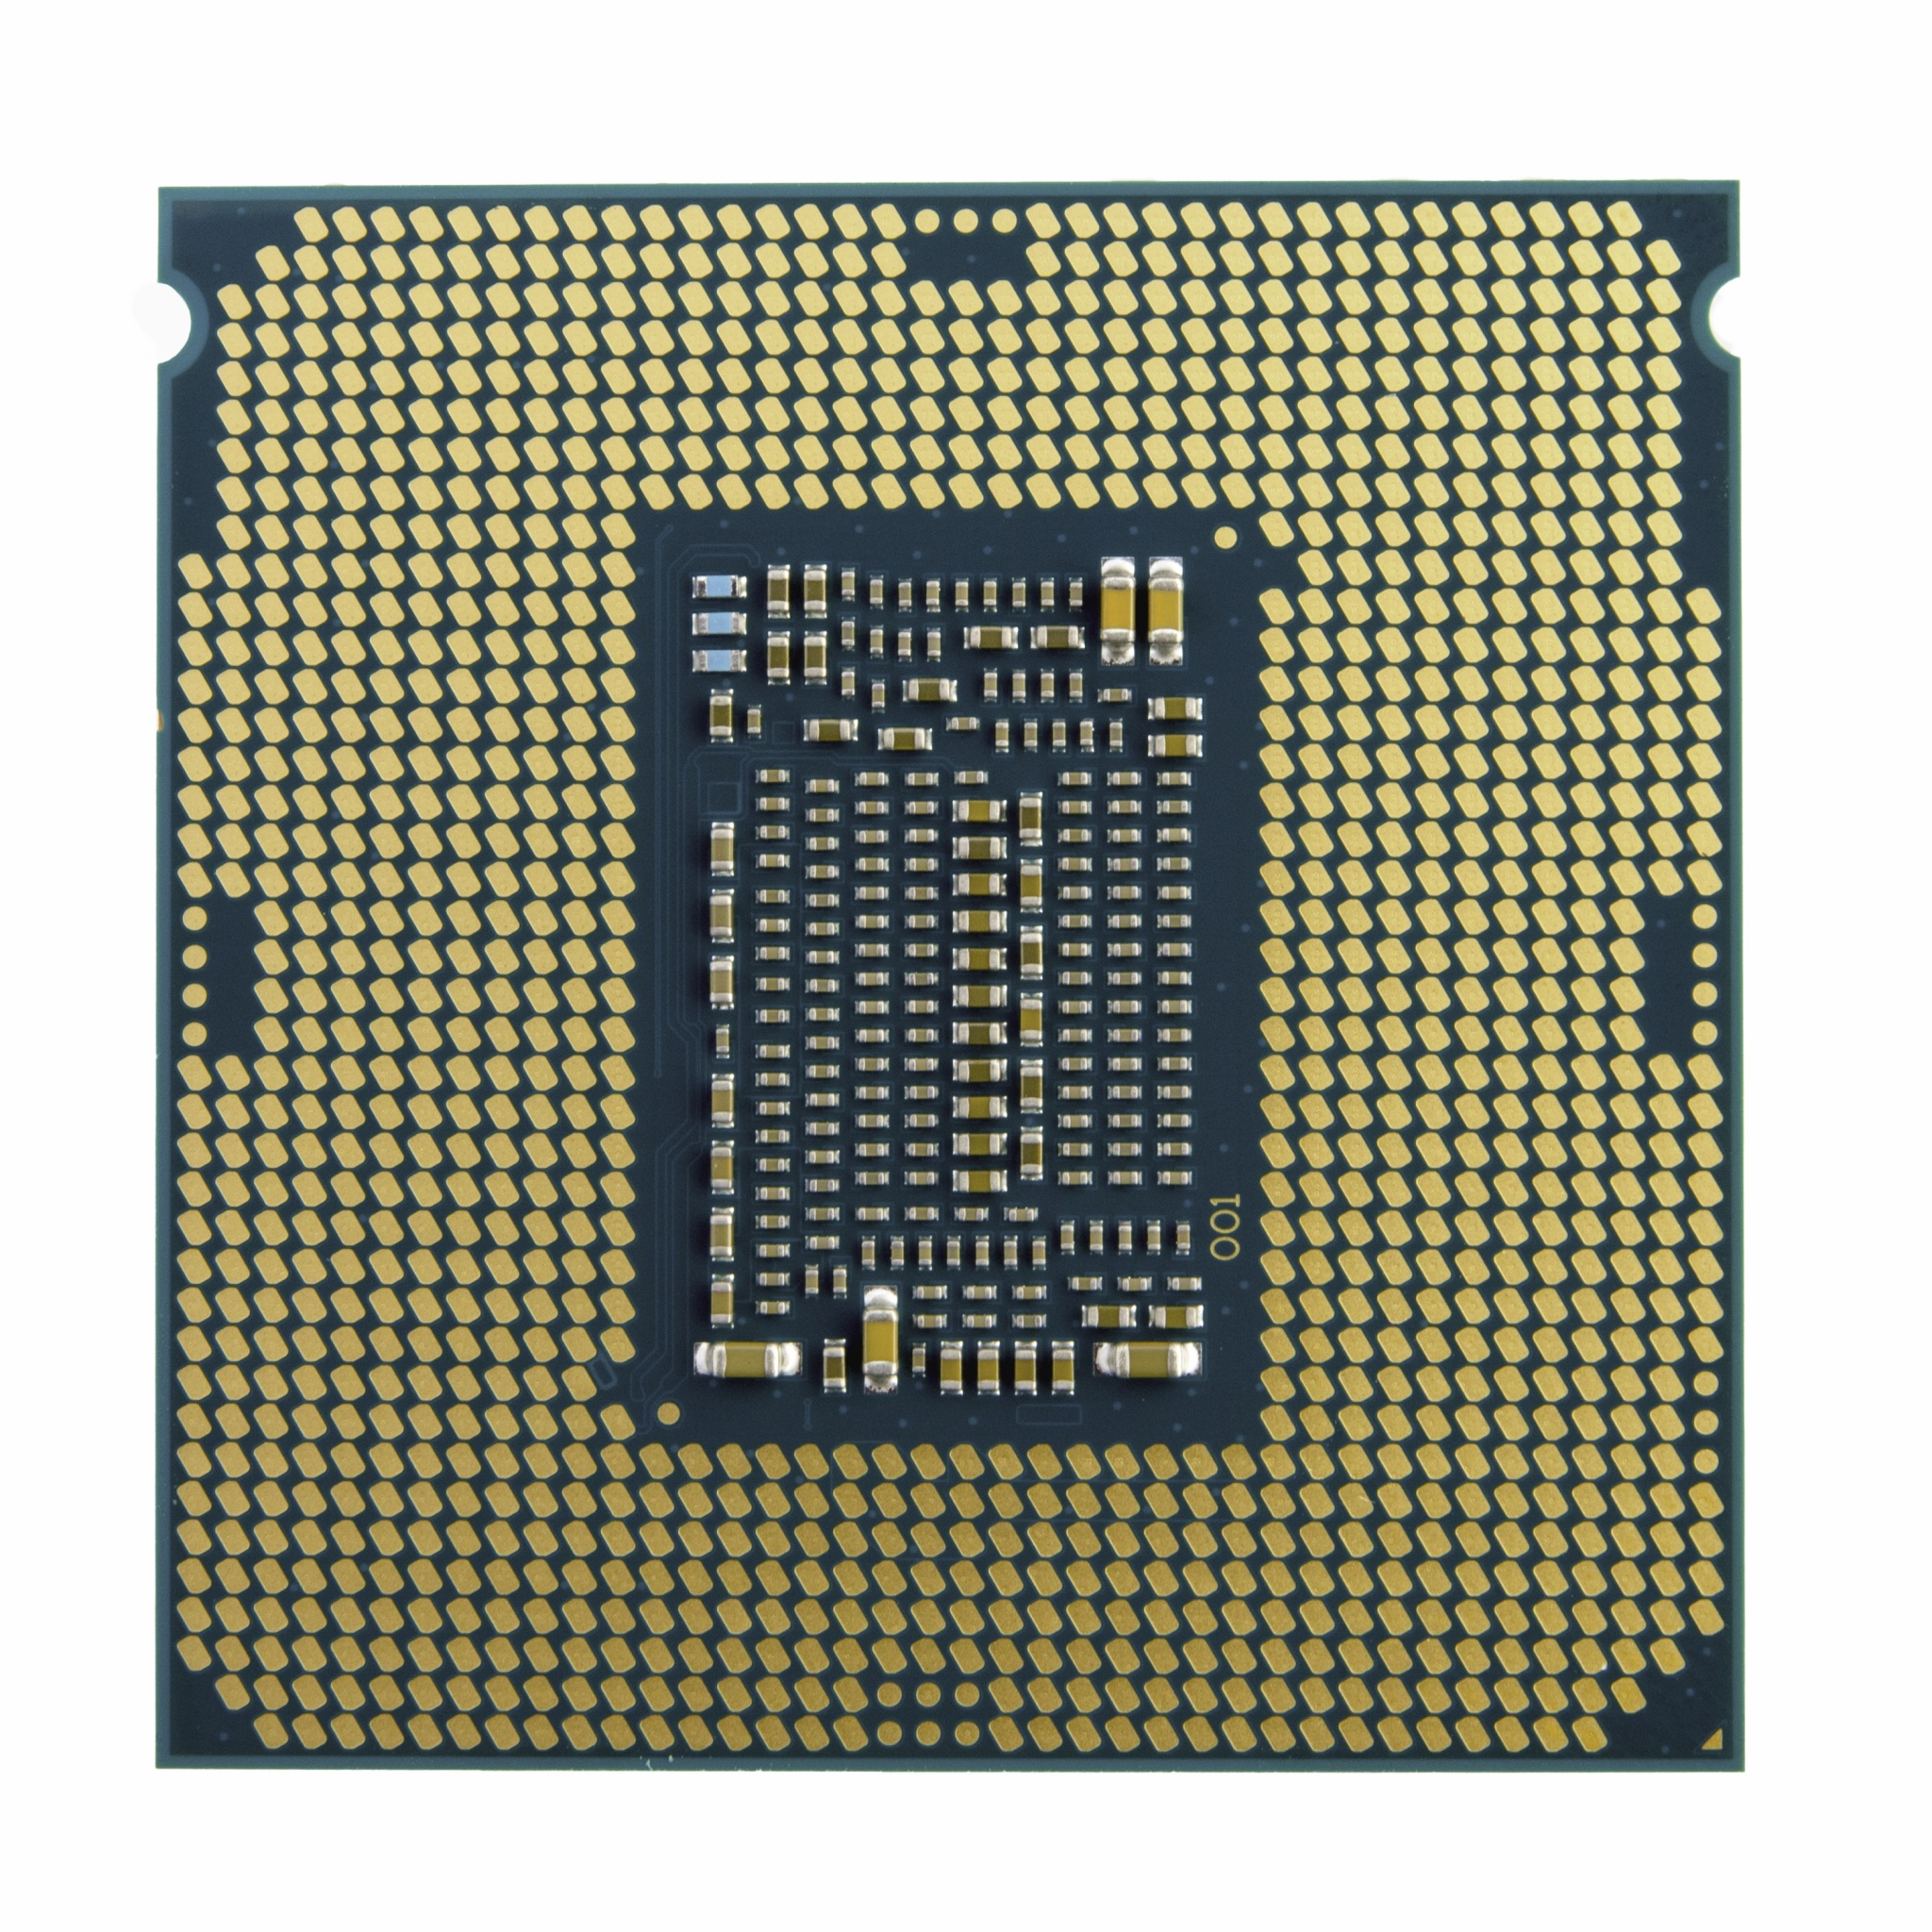 Intel Hex Core i5 10400F Core i5 10th Gen Comet Lake CPU/Processor